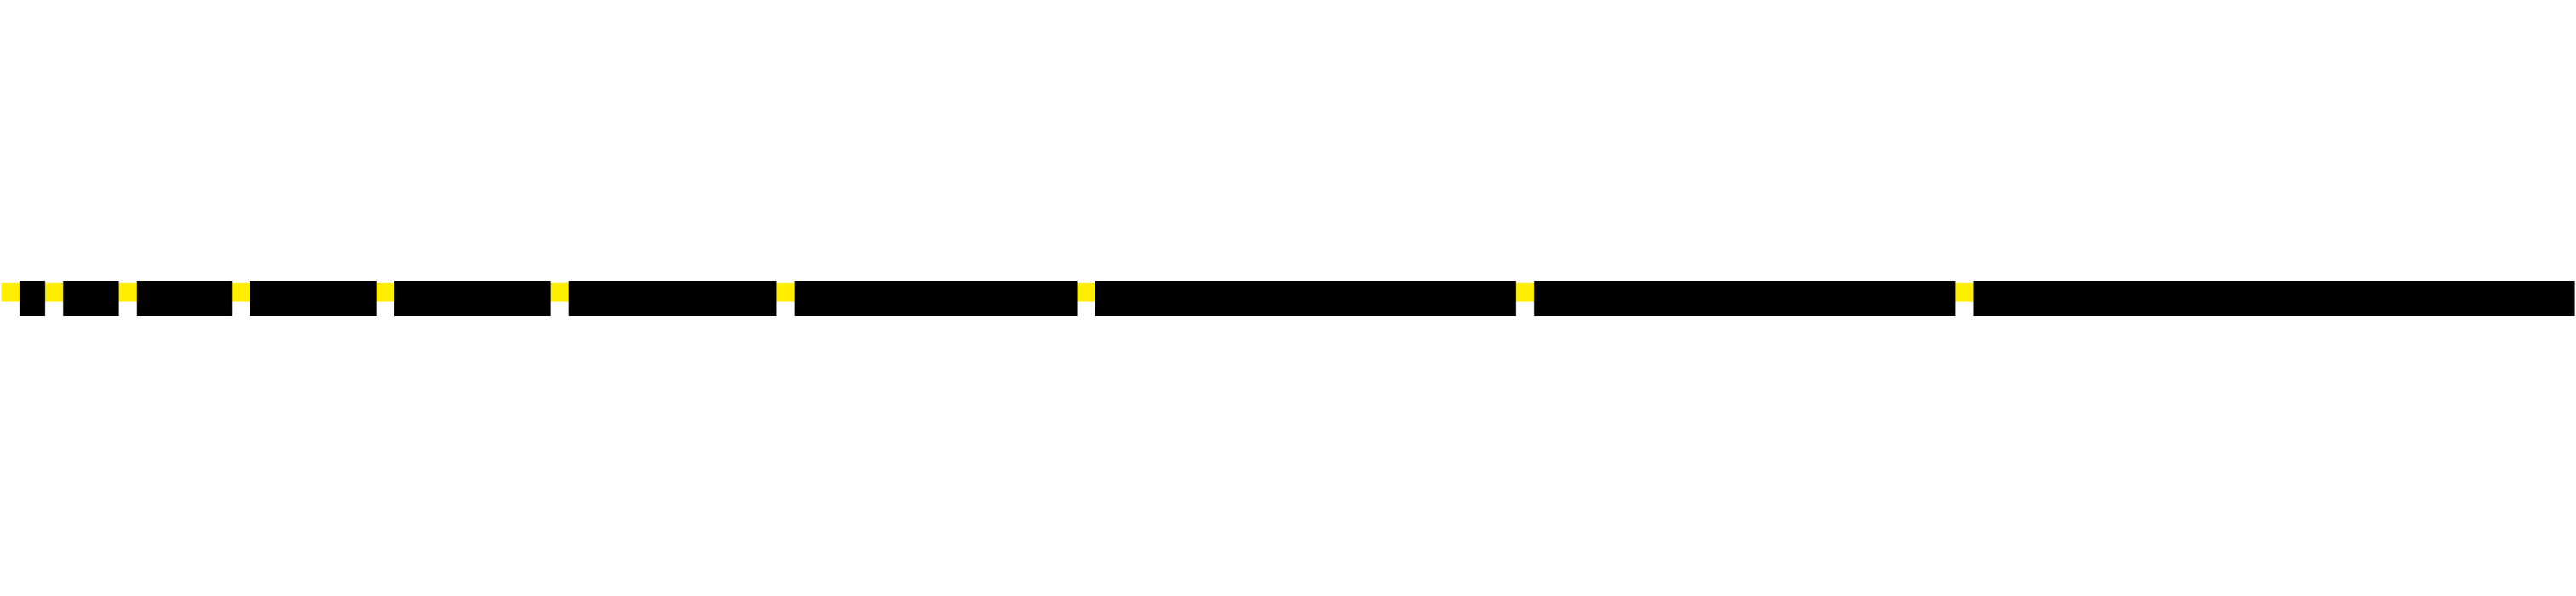 Vector Illustration of Web - Bars